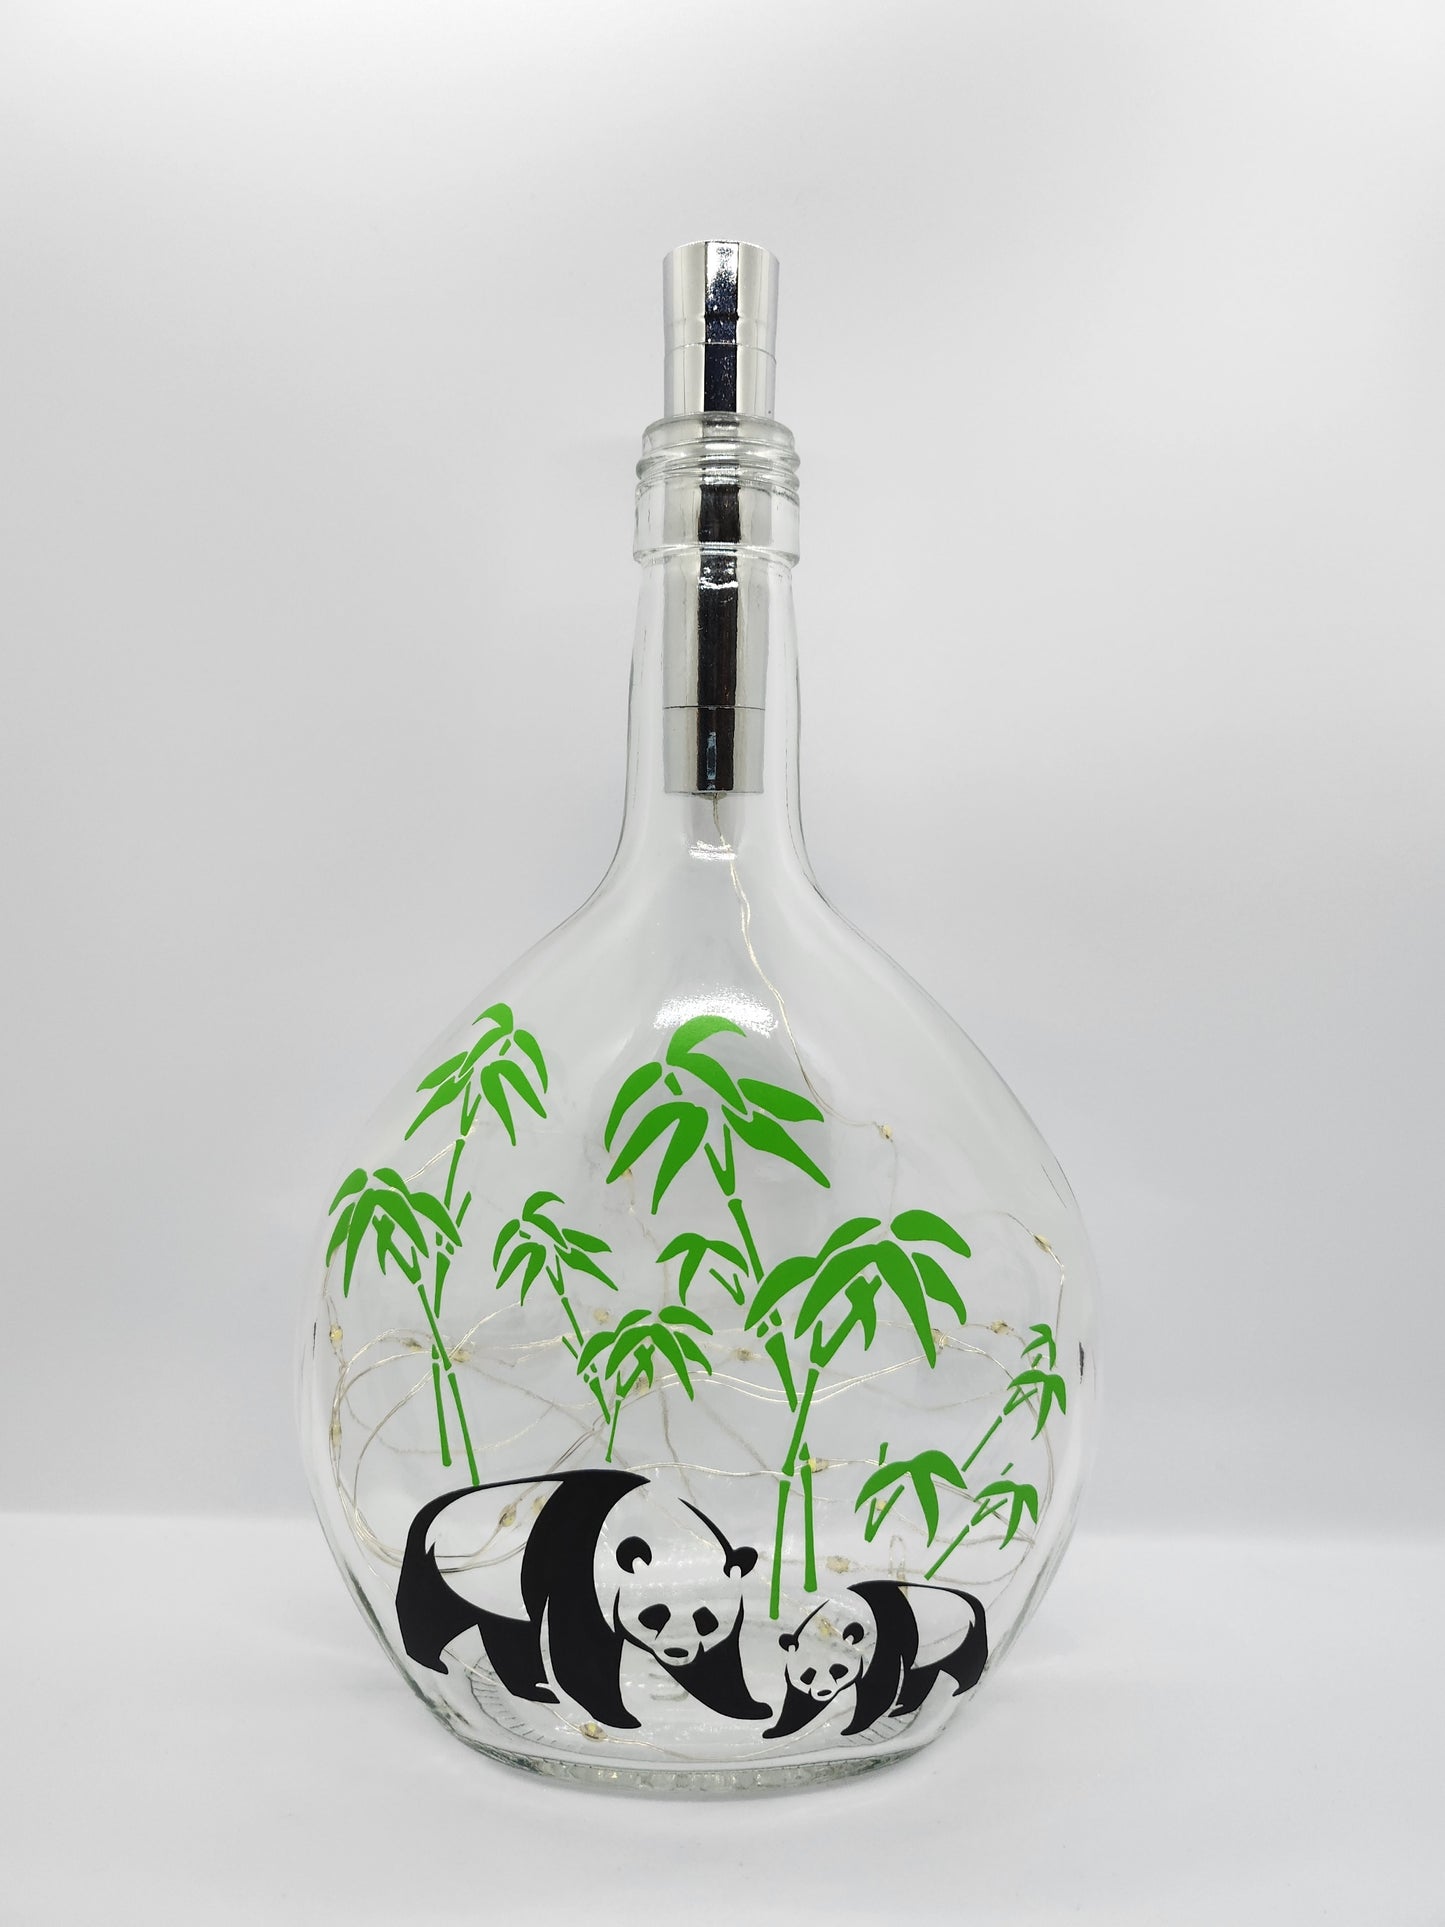 Bamboo Panda Themed Glass Light Up Bottle / Night Lamp